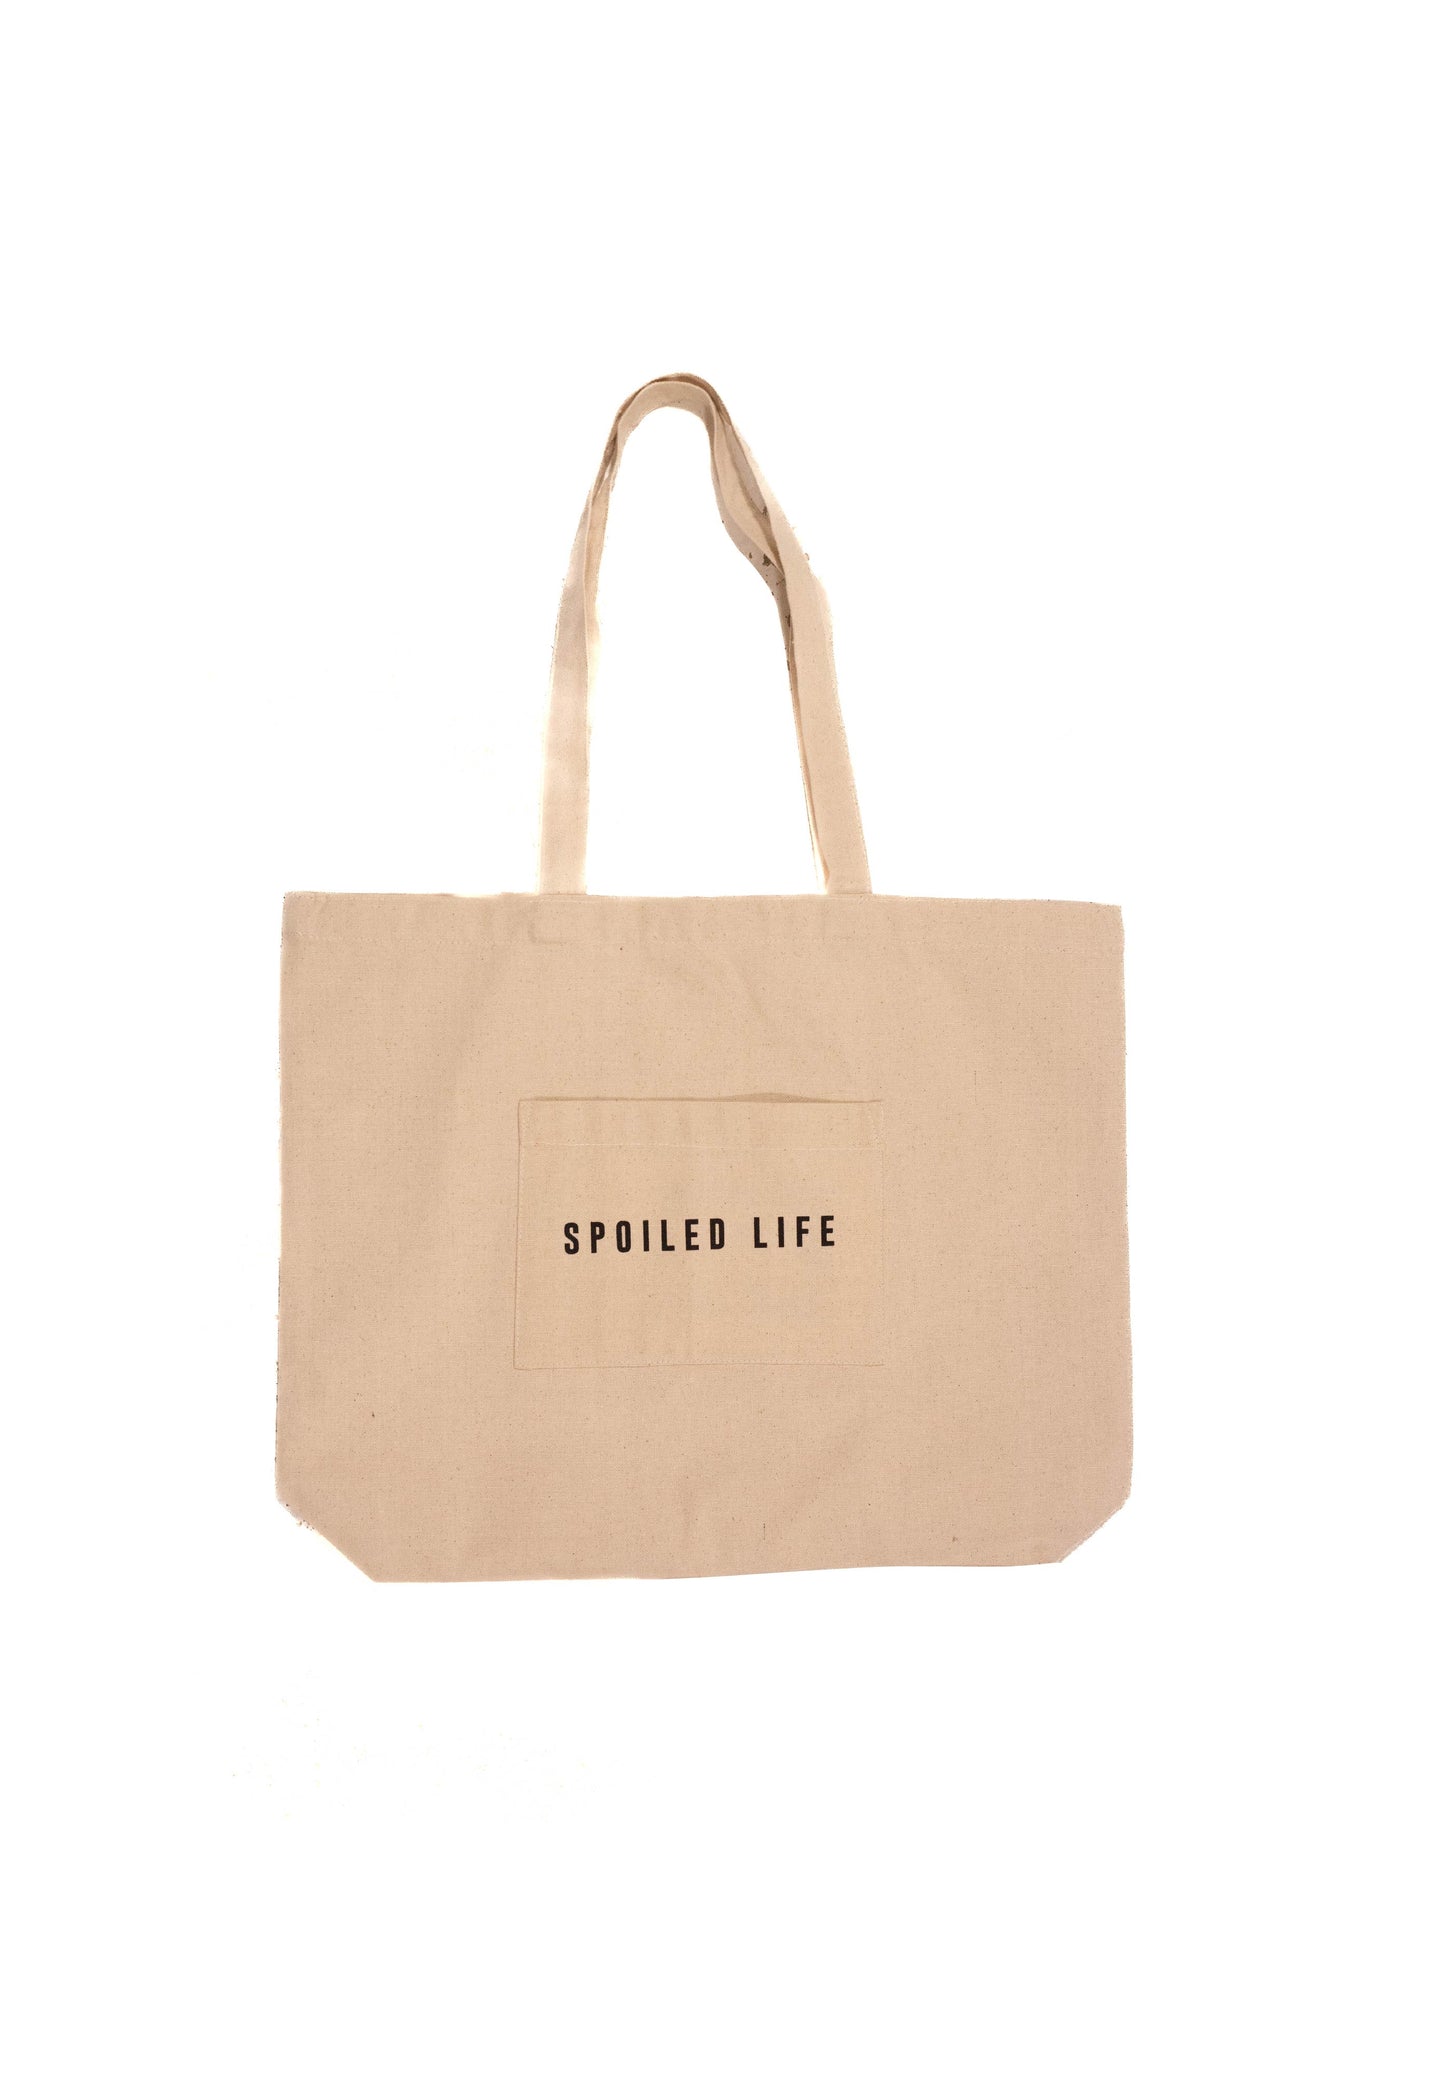 Spoiled Life Tote Bag